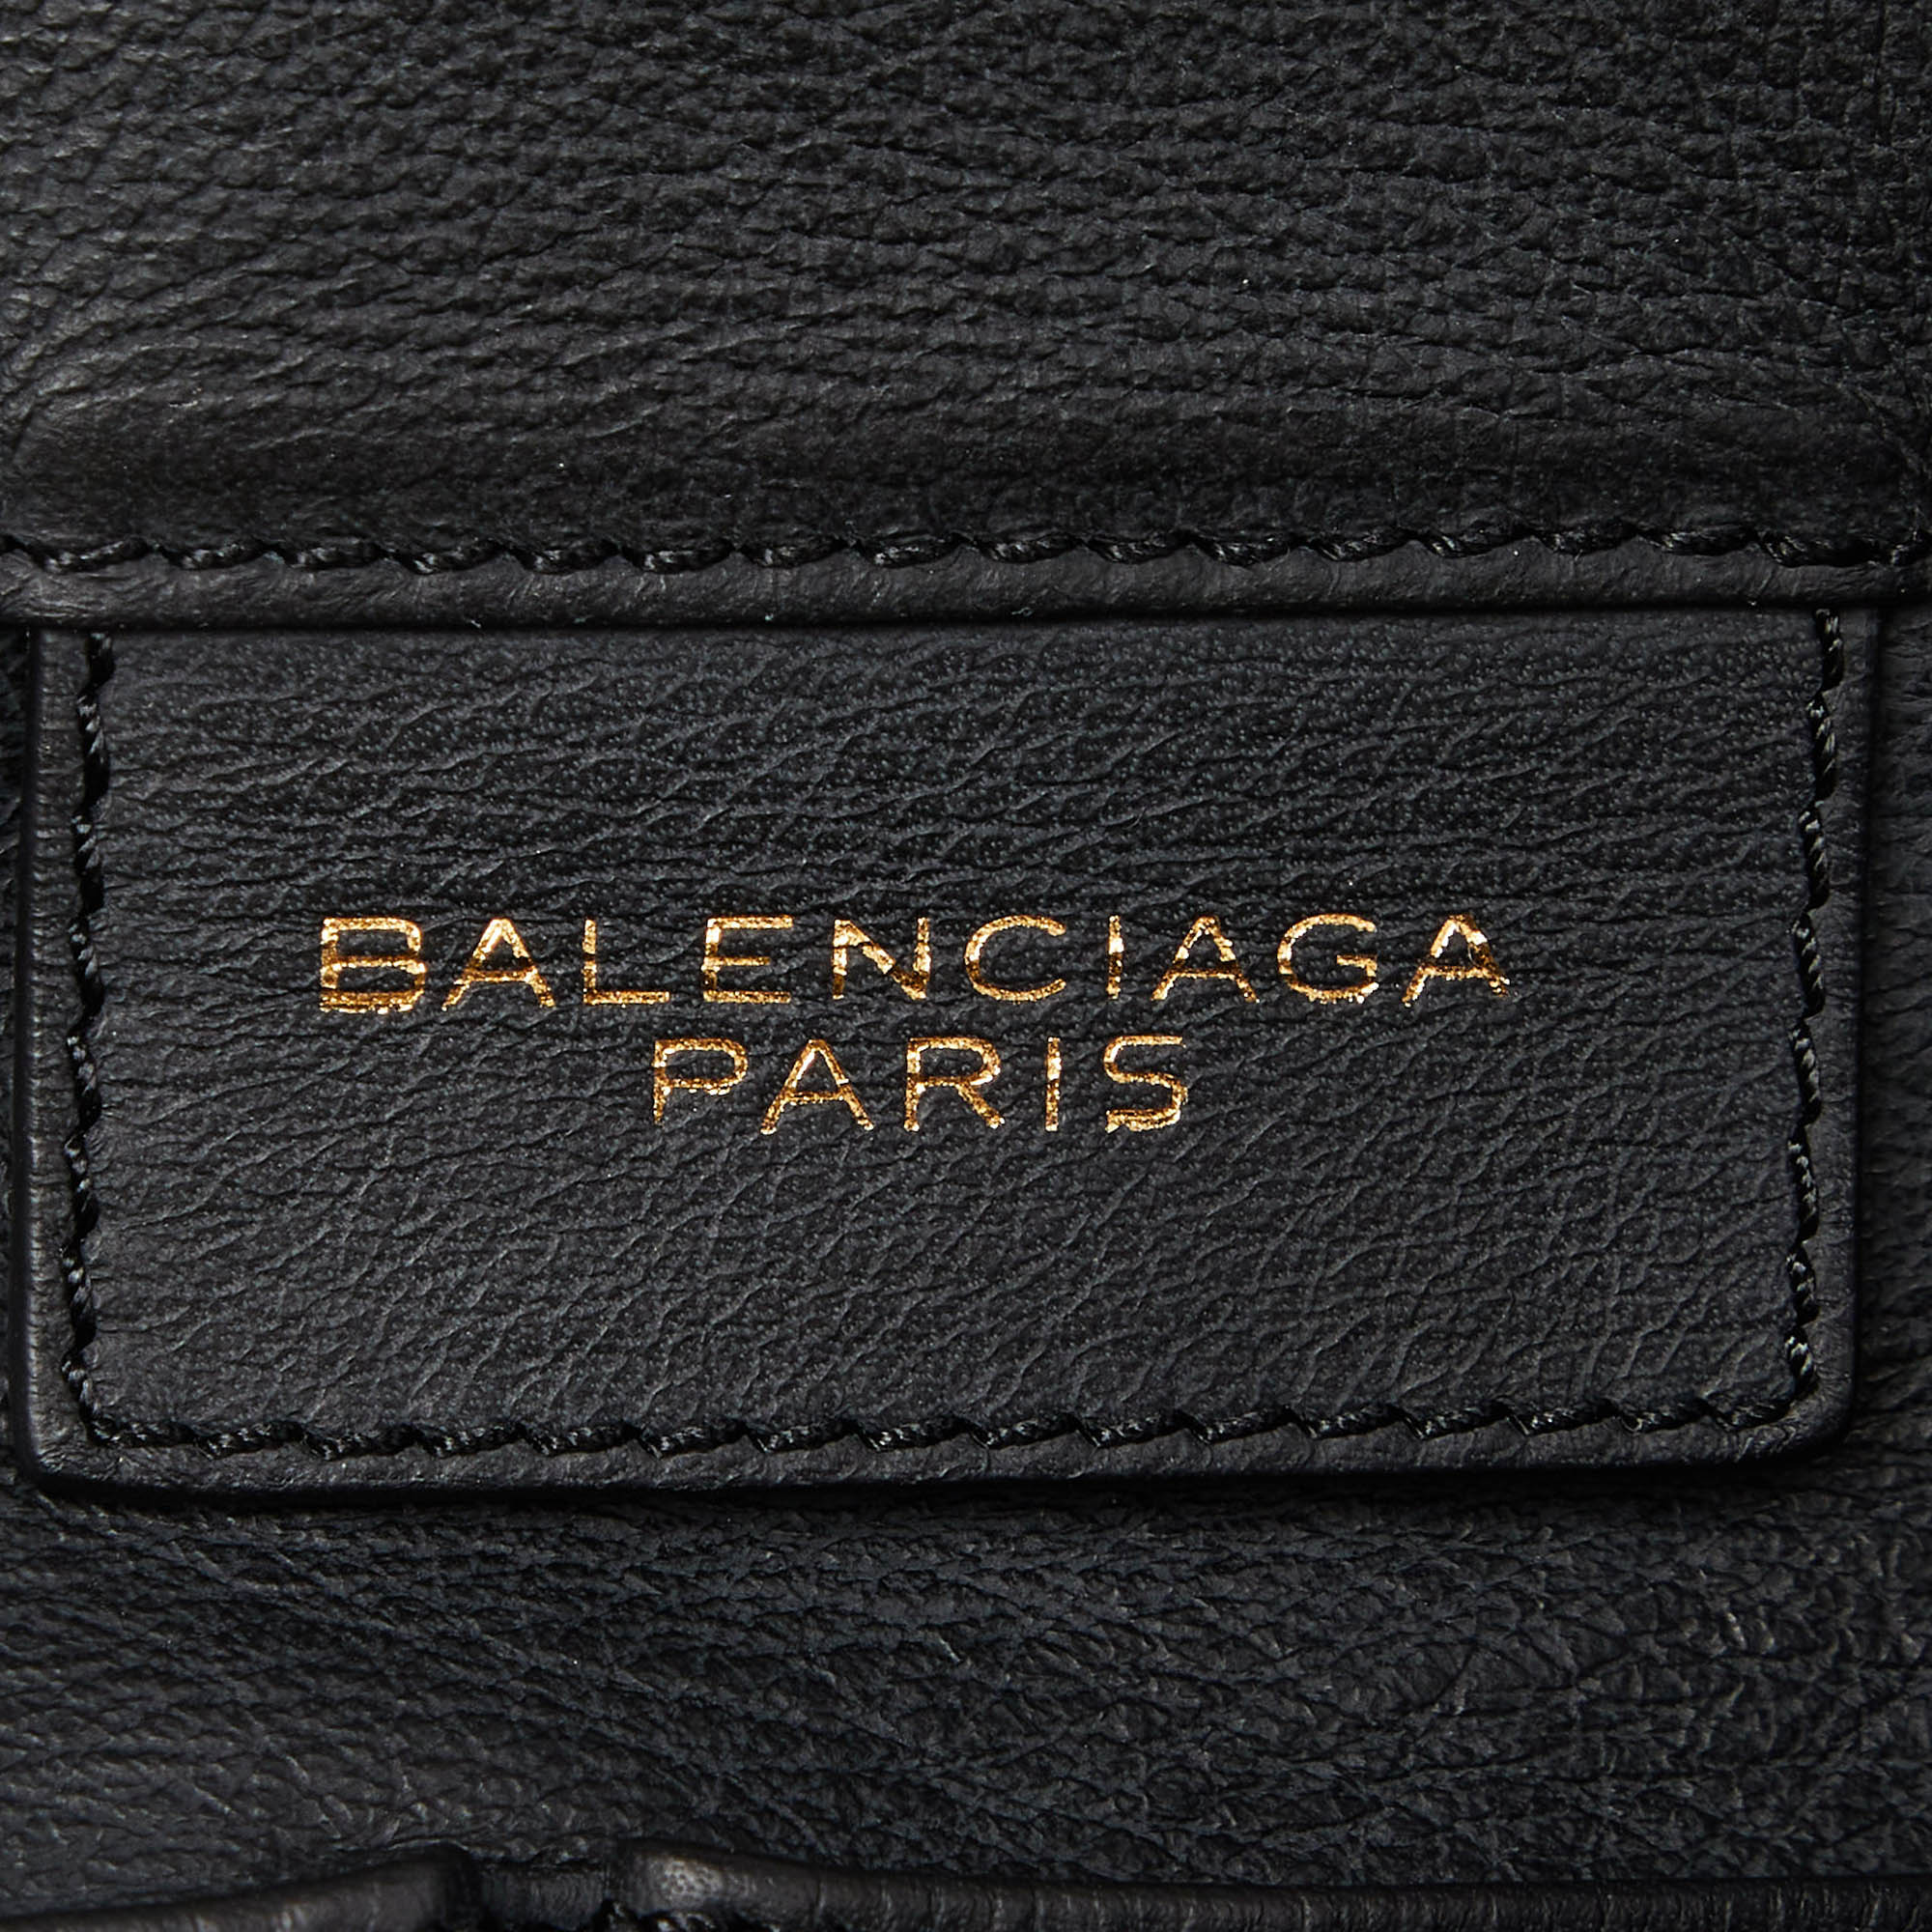 Balanciaga Black Leather Papier A5 Tote